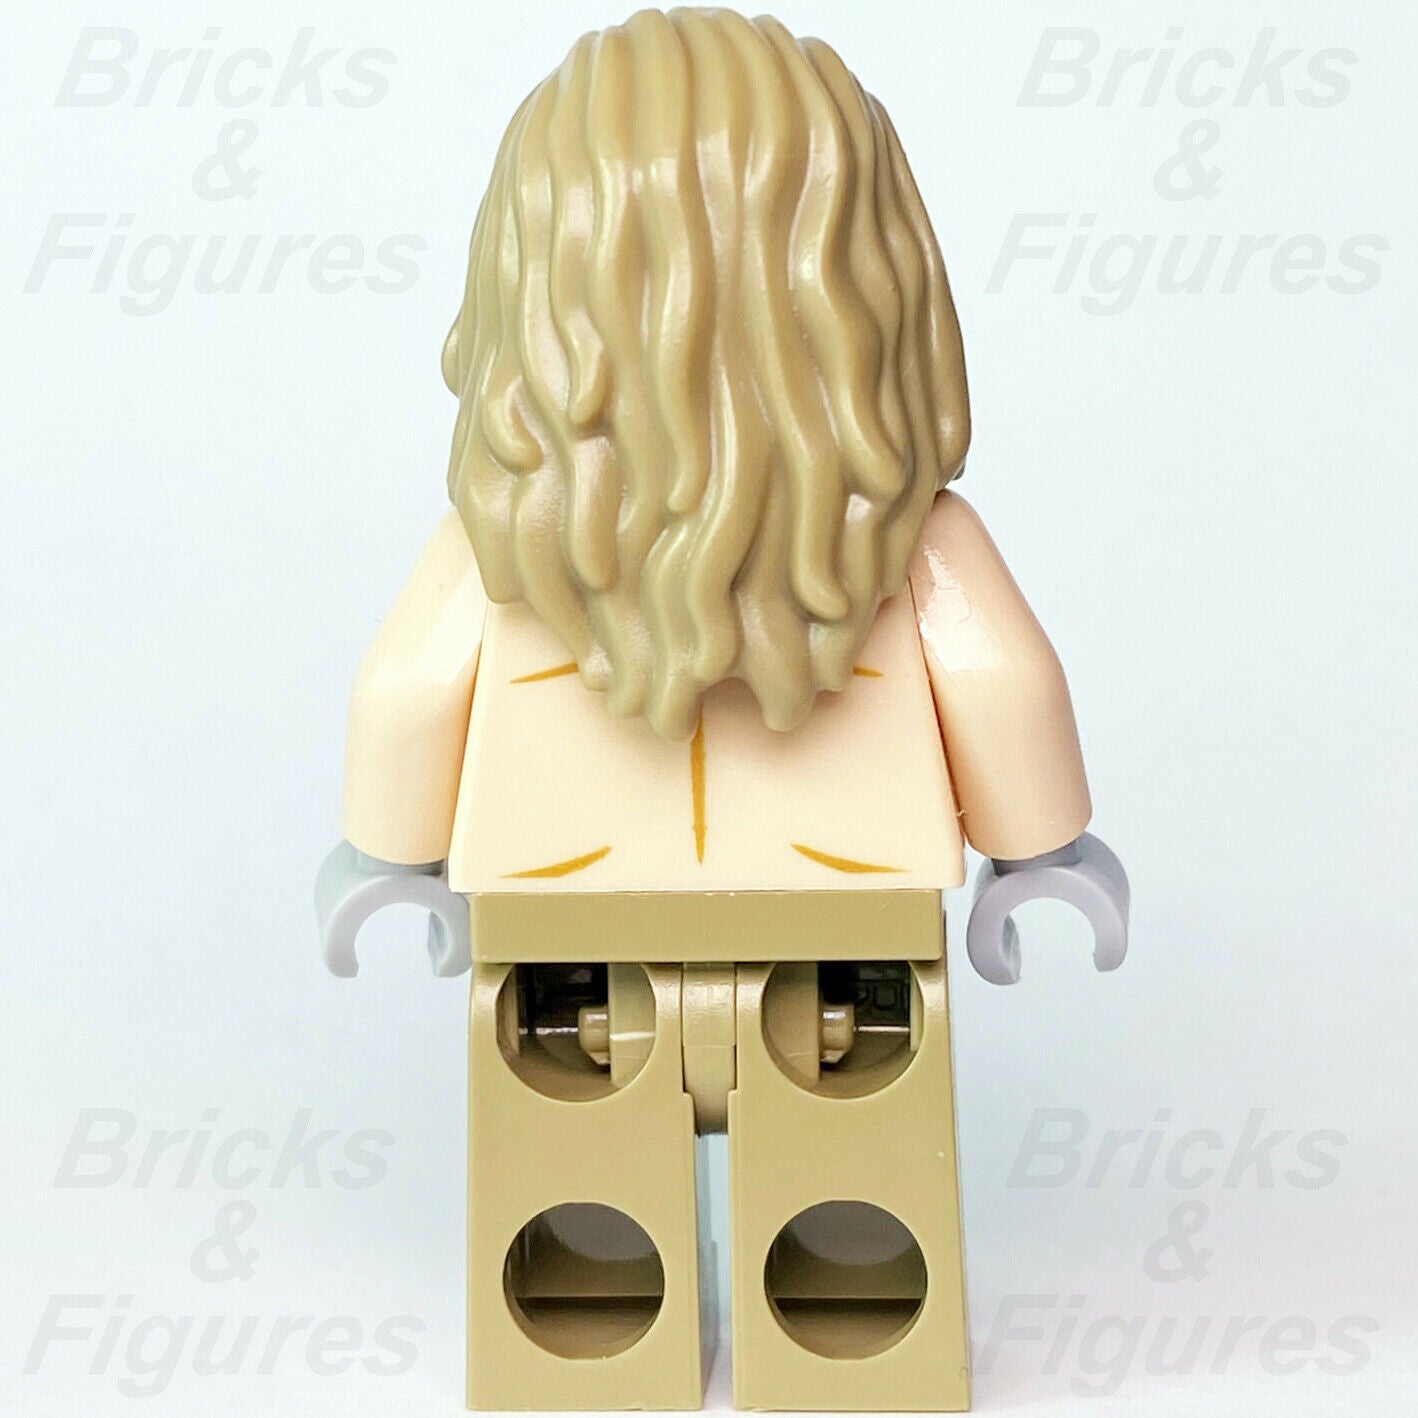 Marvel Super Heroes LEGO Bro Thor Fat Avengers Endgame Minifigure 76200 sh753 - Bricks & Figures